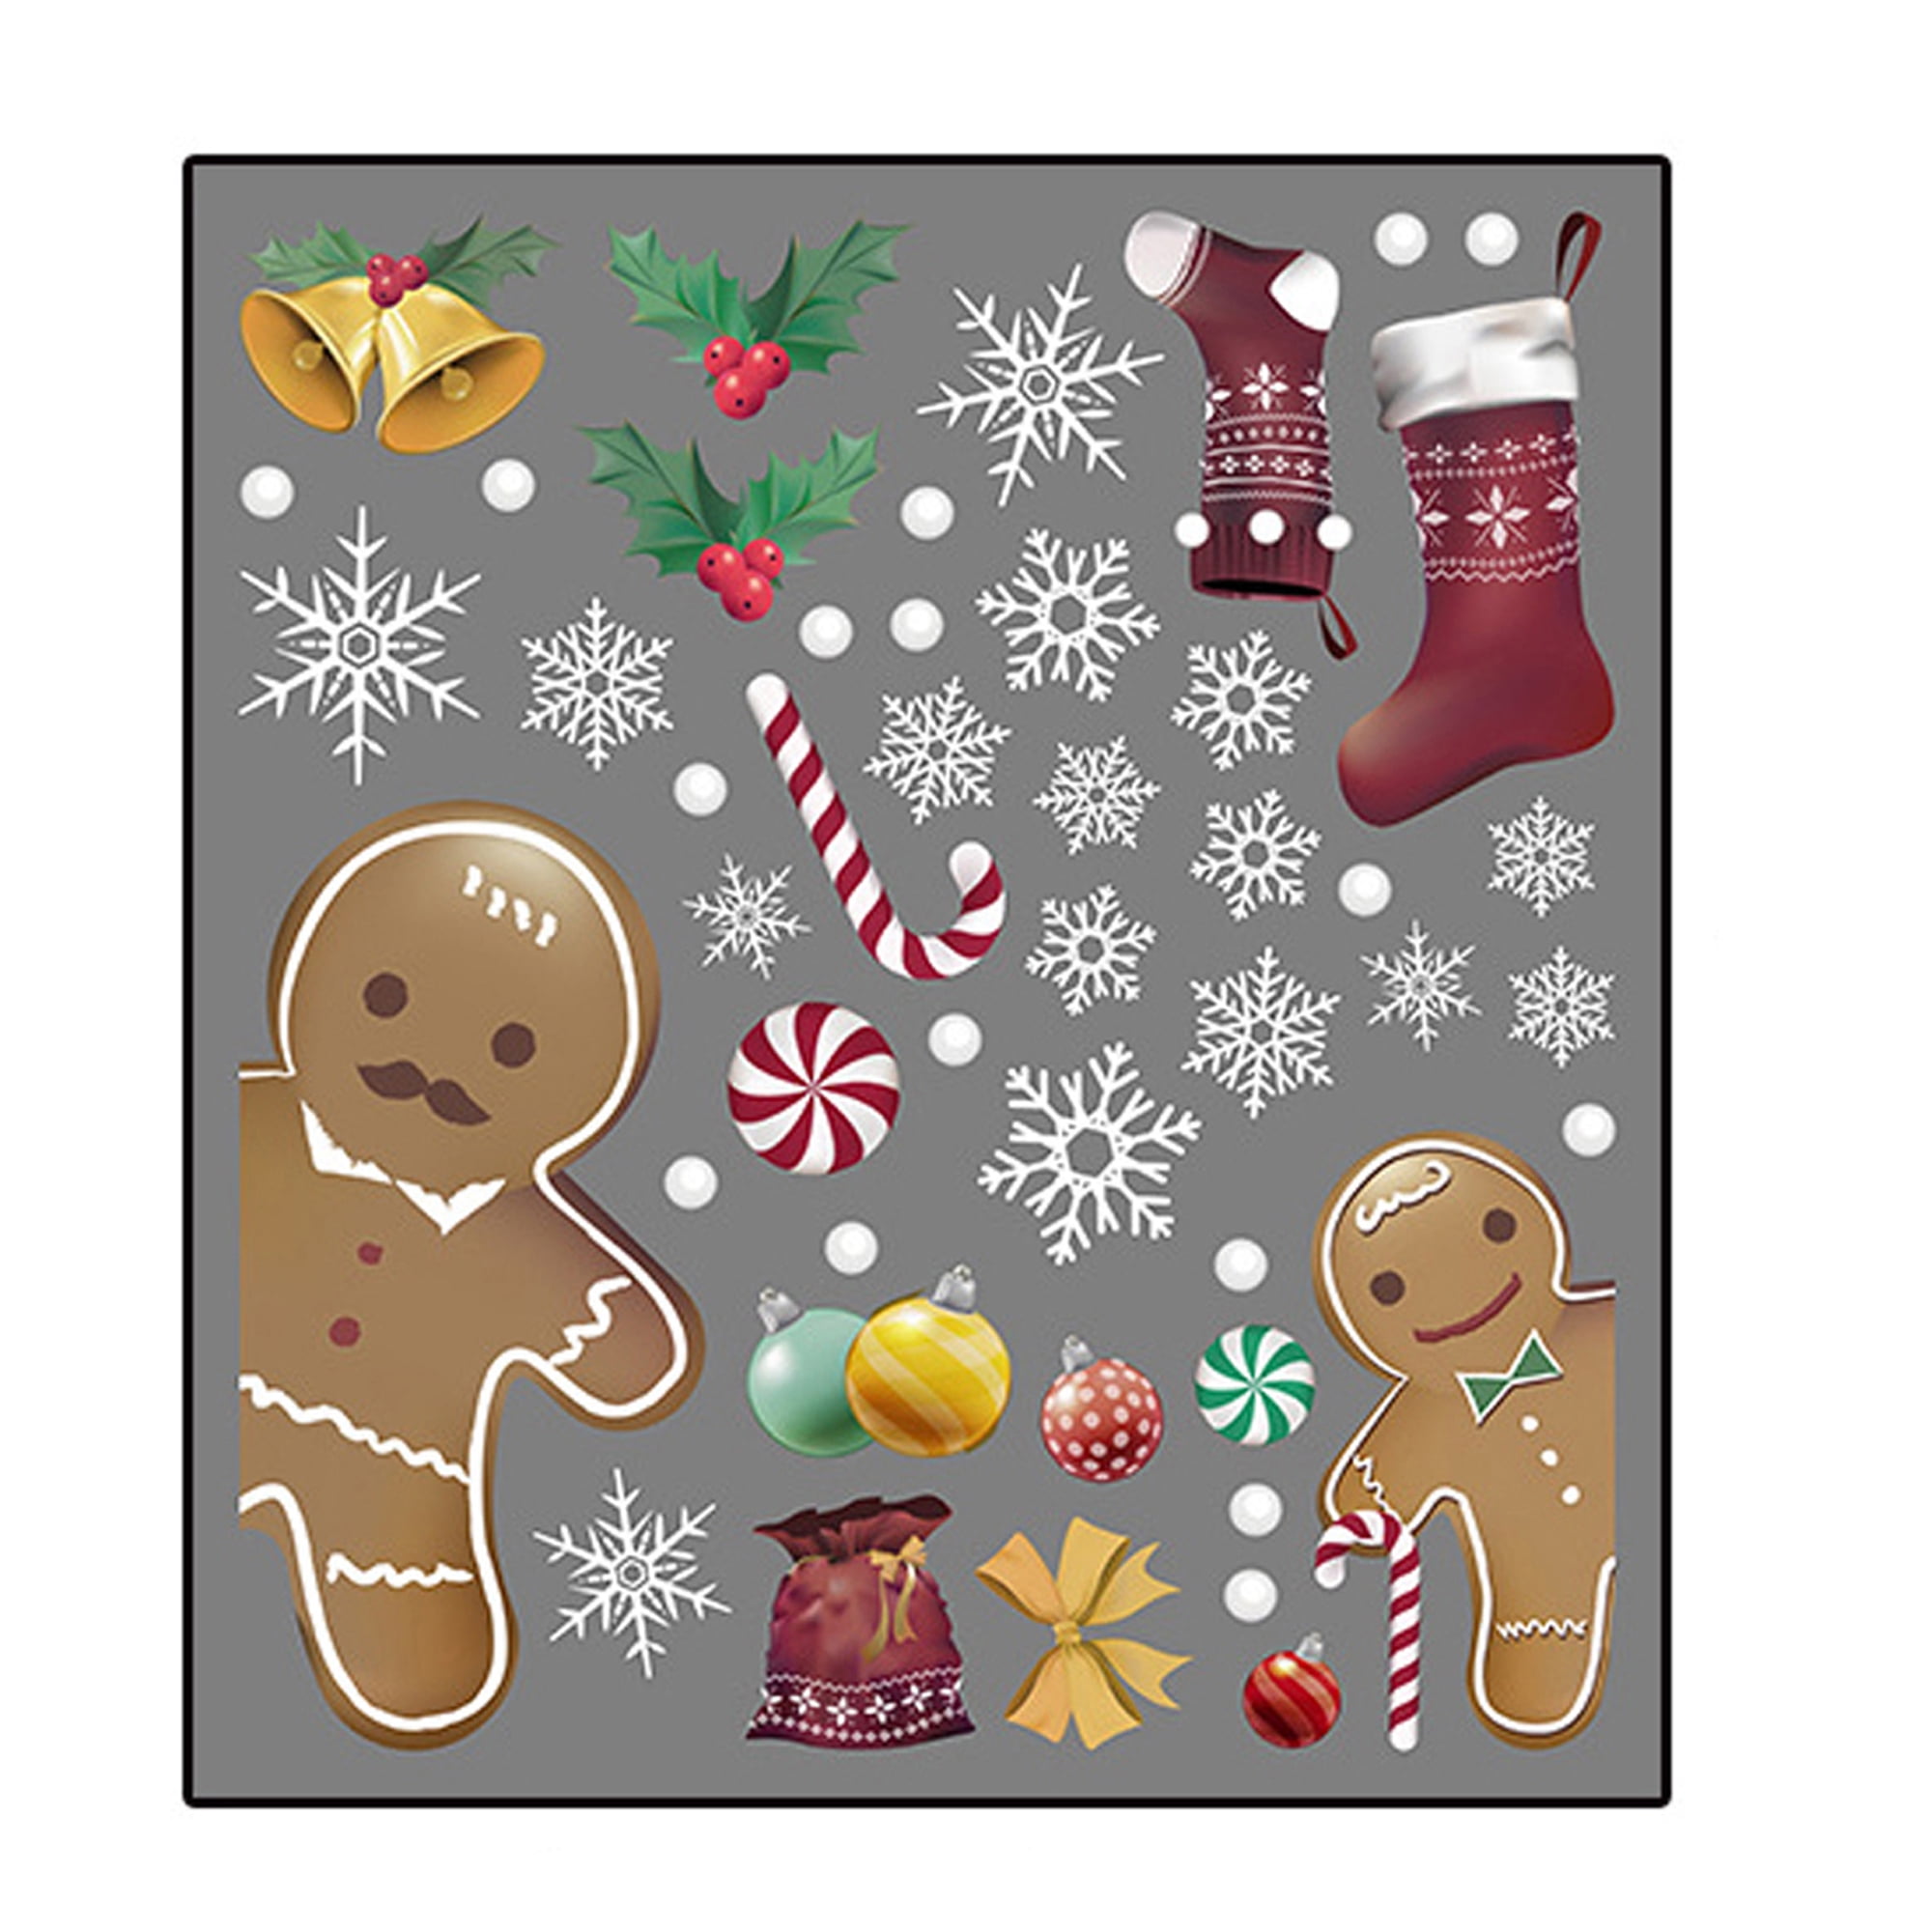 Giftwrap Window Decor 20 x Gingerbread man vinyl stickers decal,Christmas Wall 